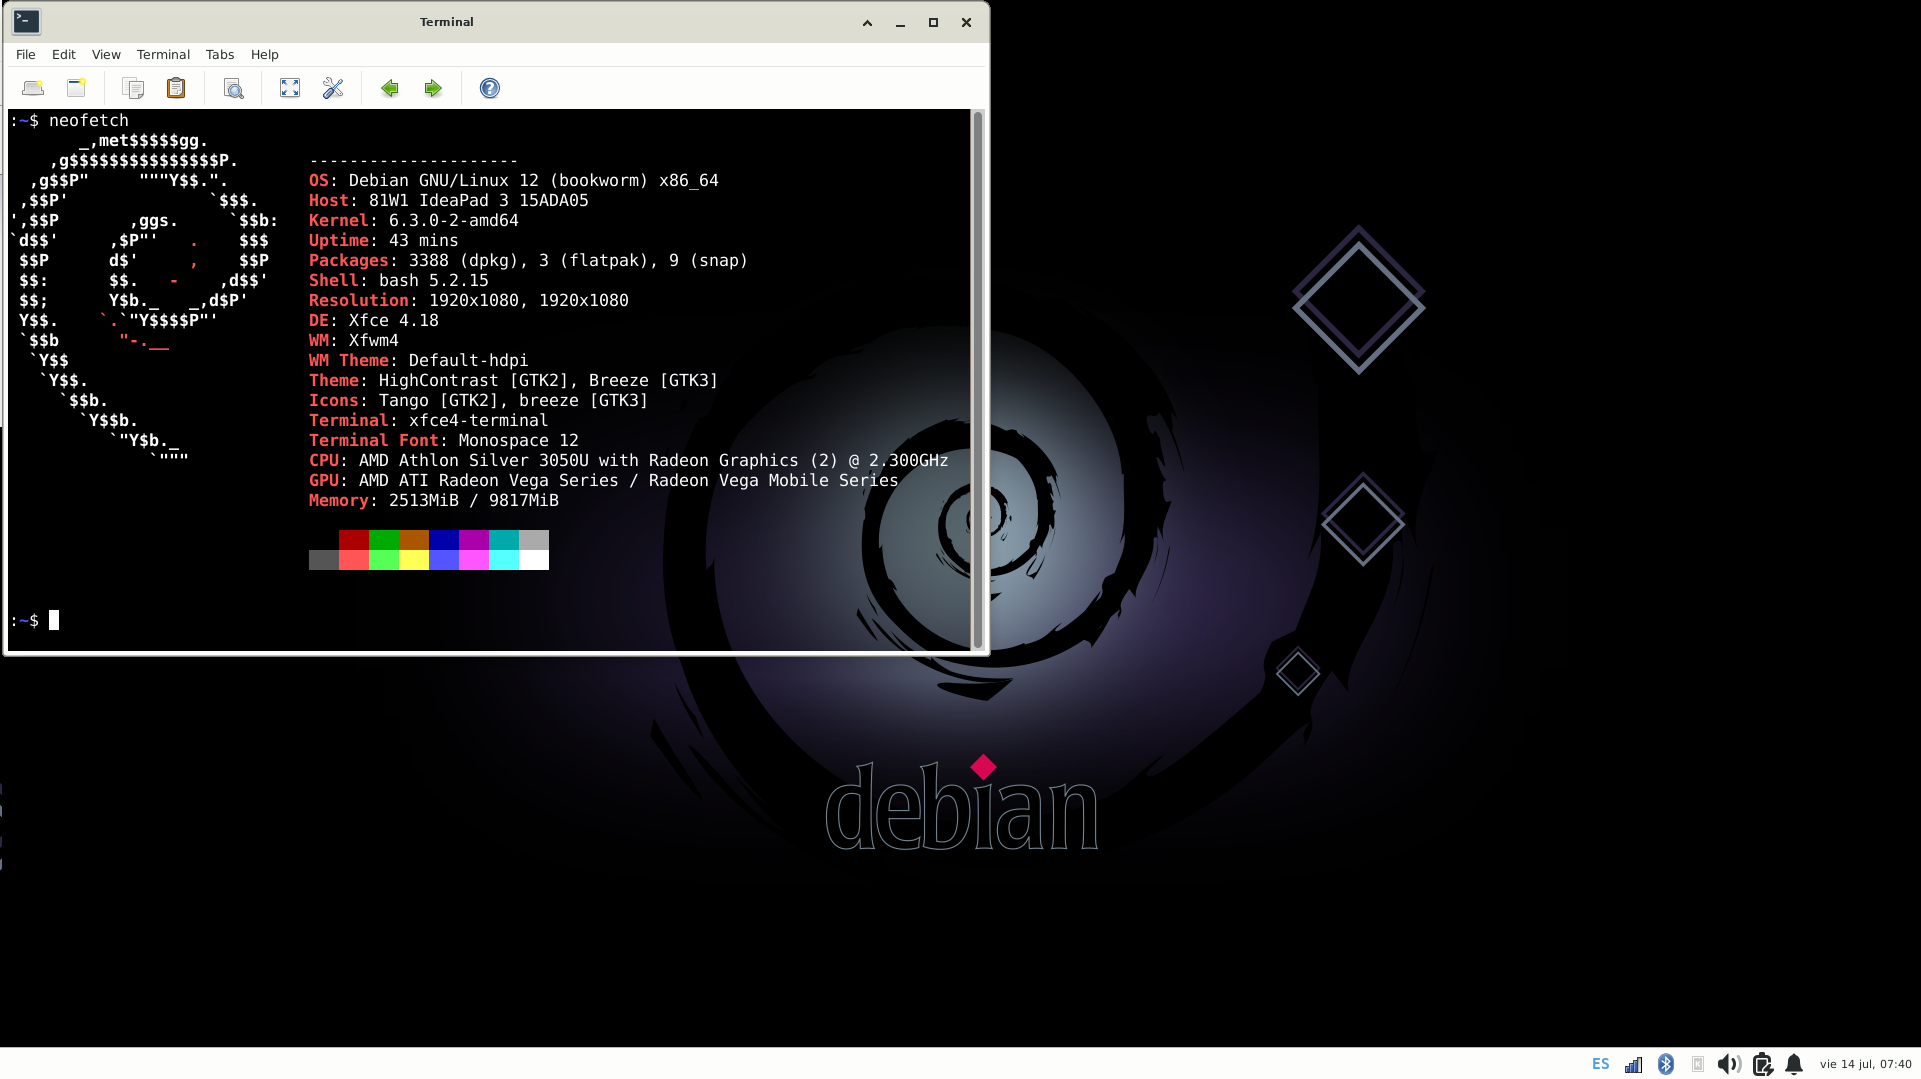 Se trata de una captura de pantalla de mi Debian 12. Salen datos del sistema